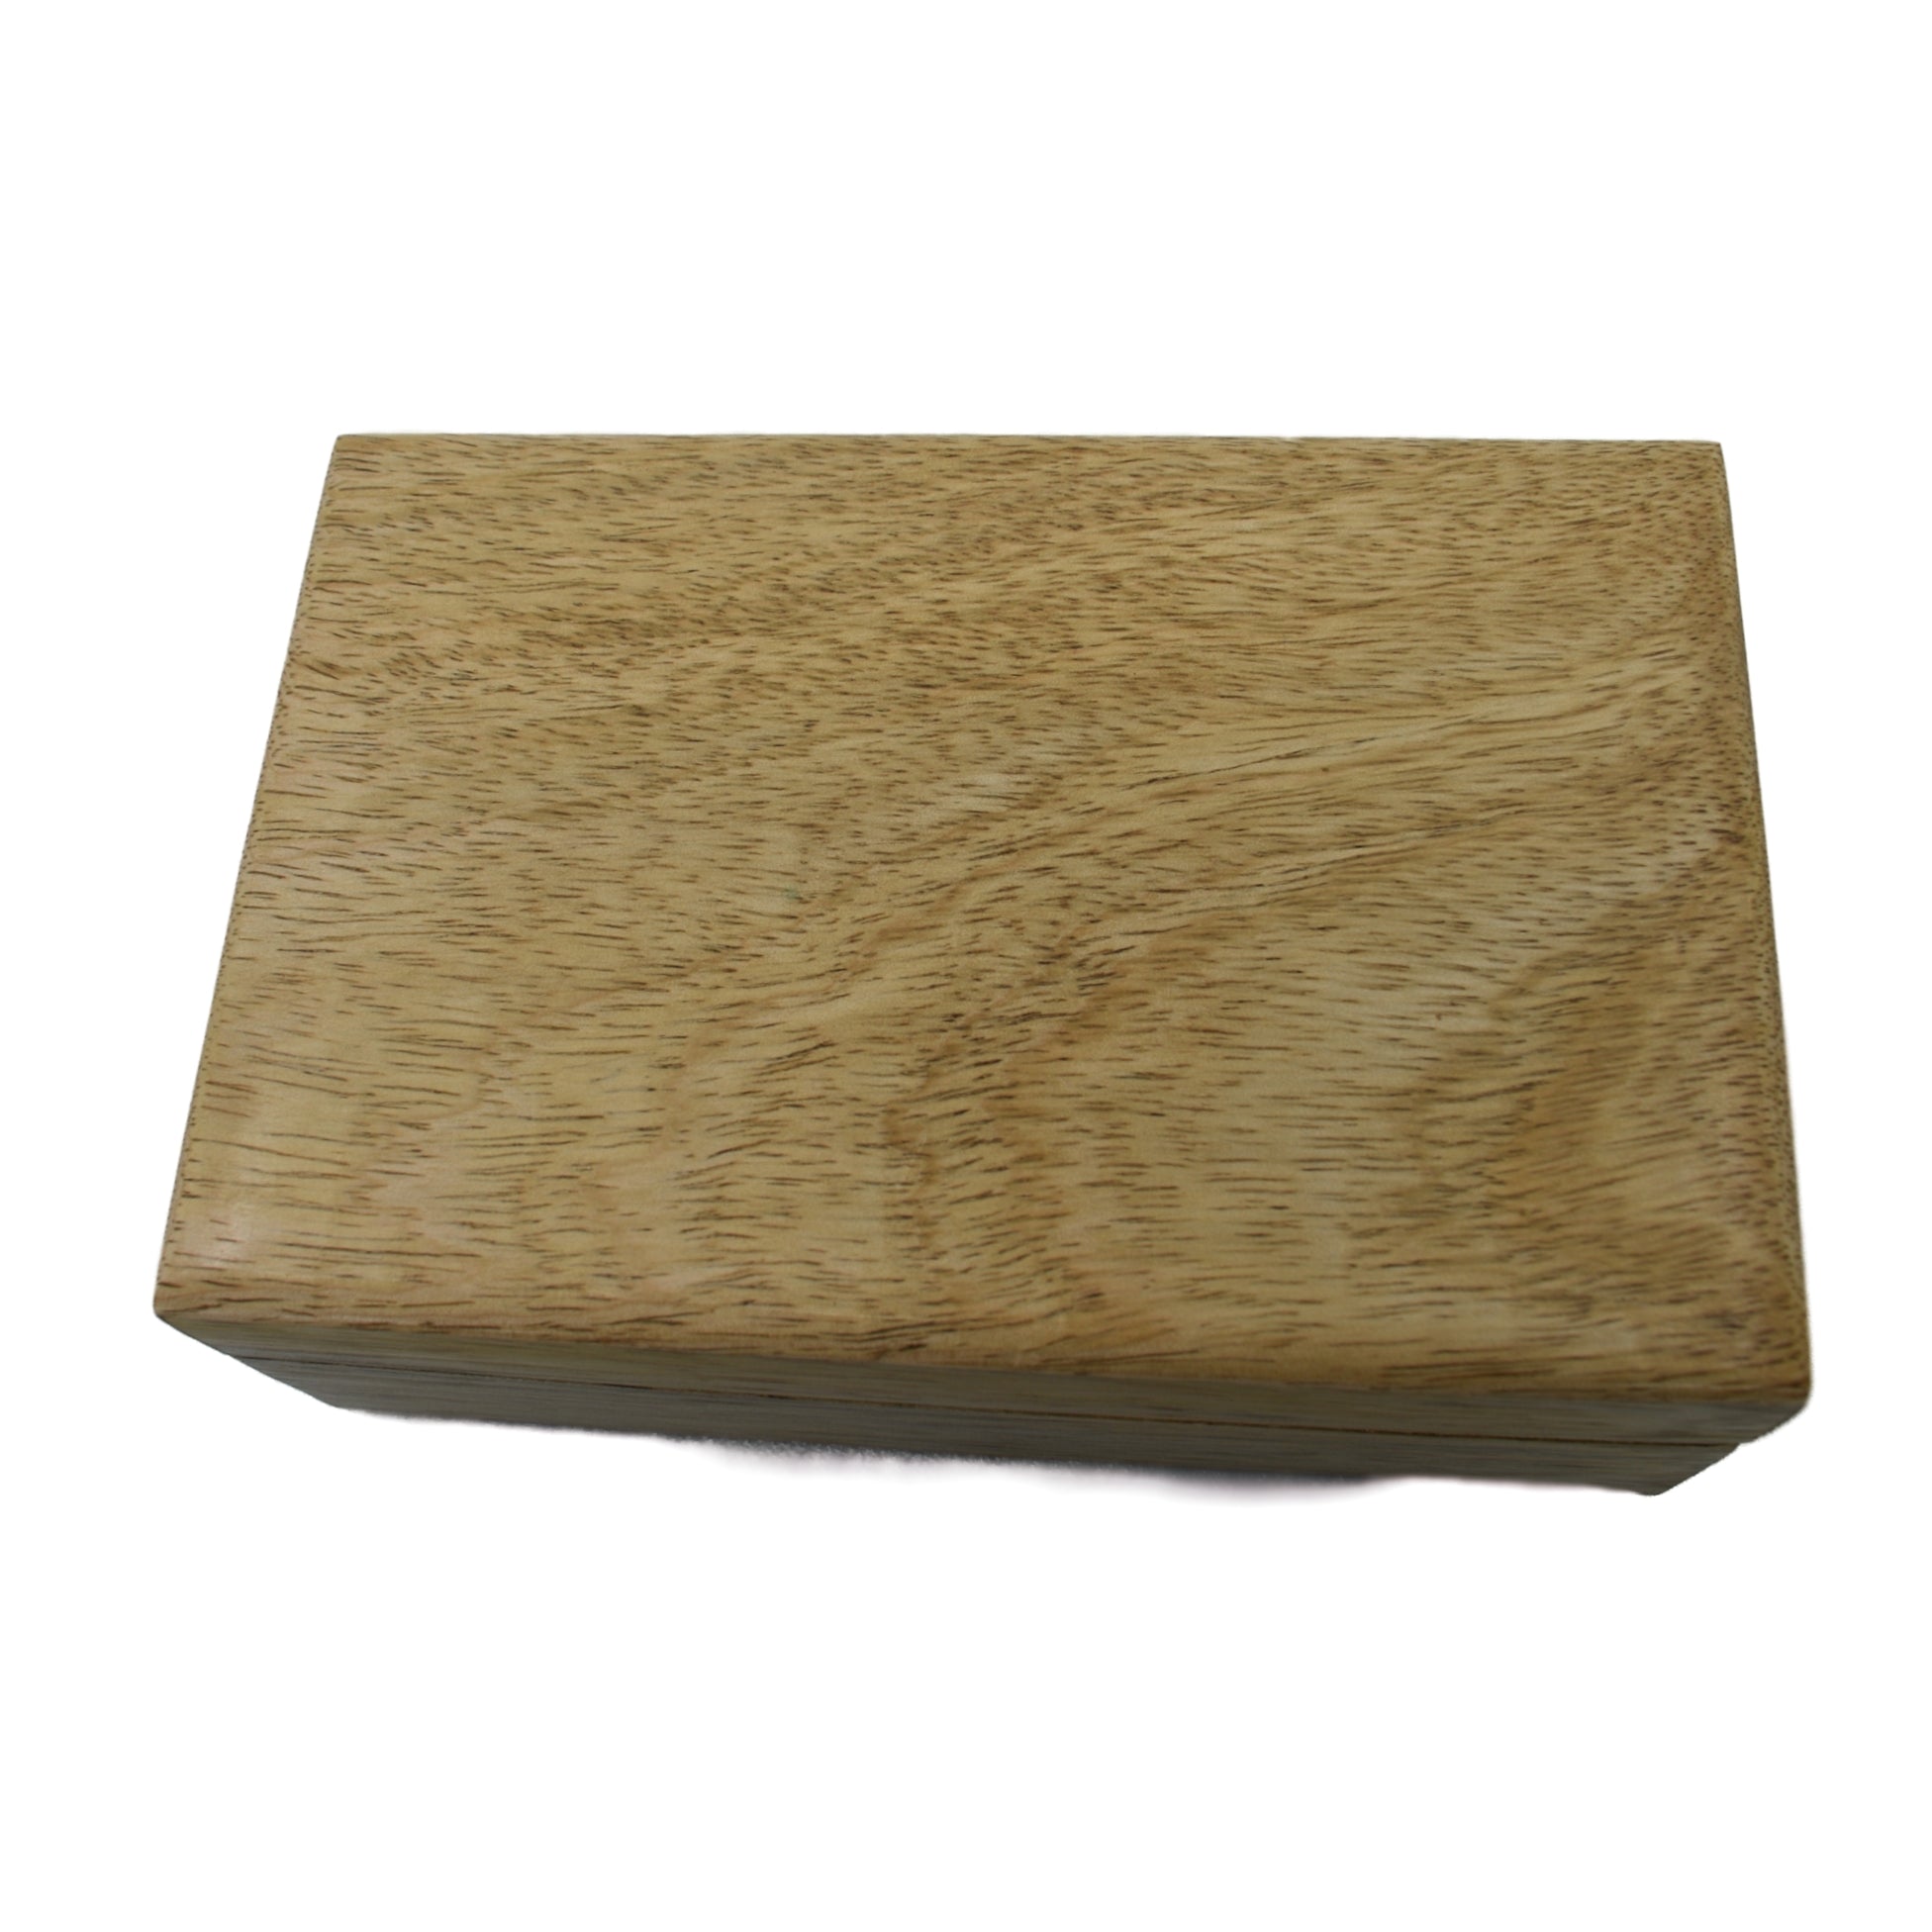 Plain box wood, 